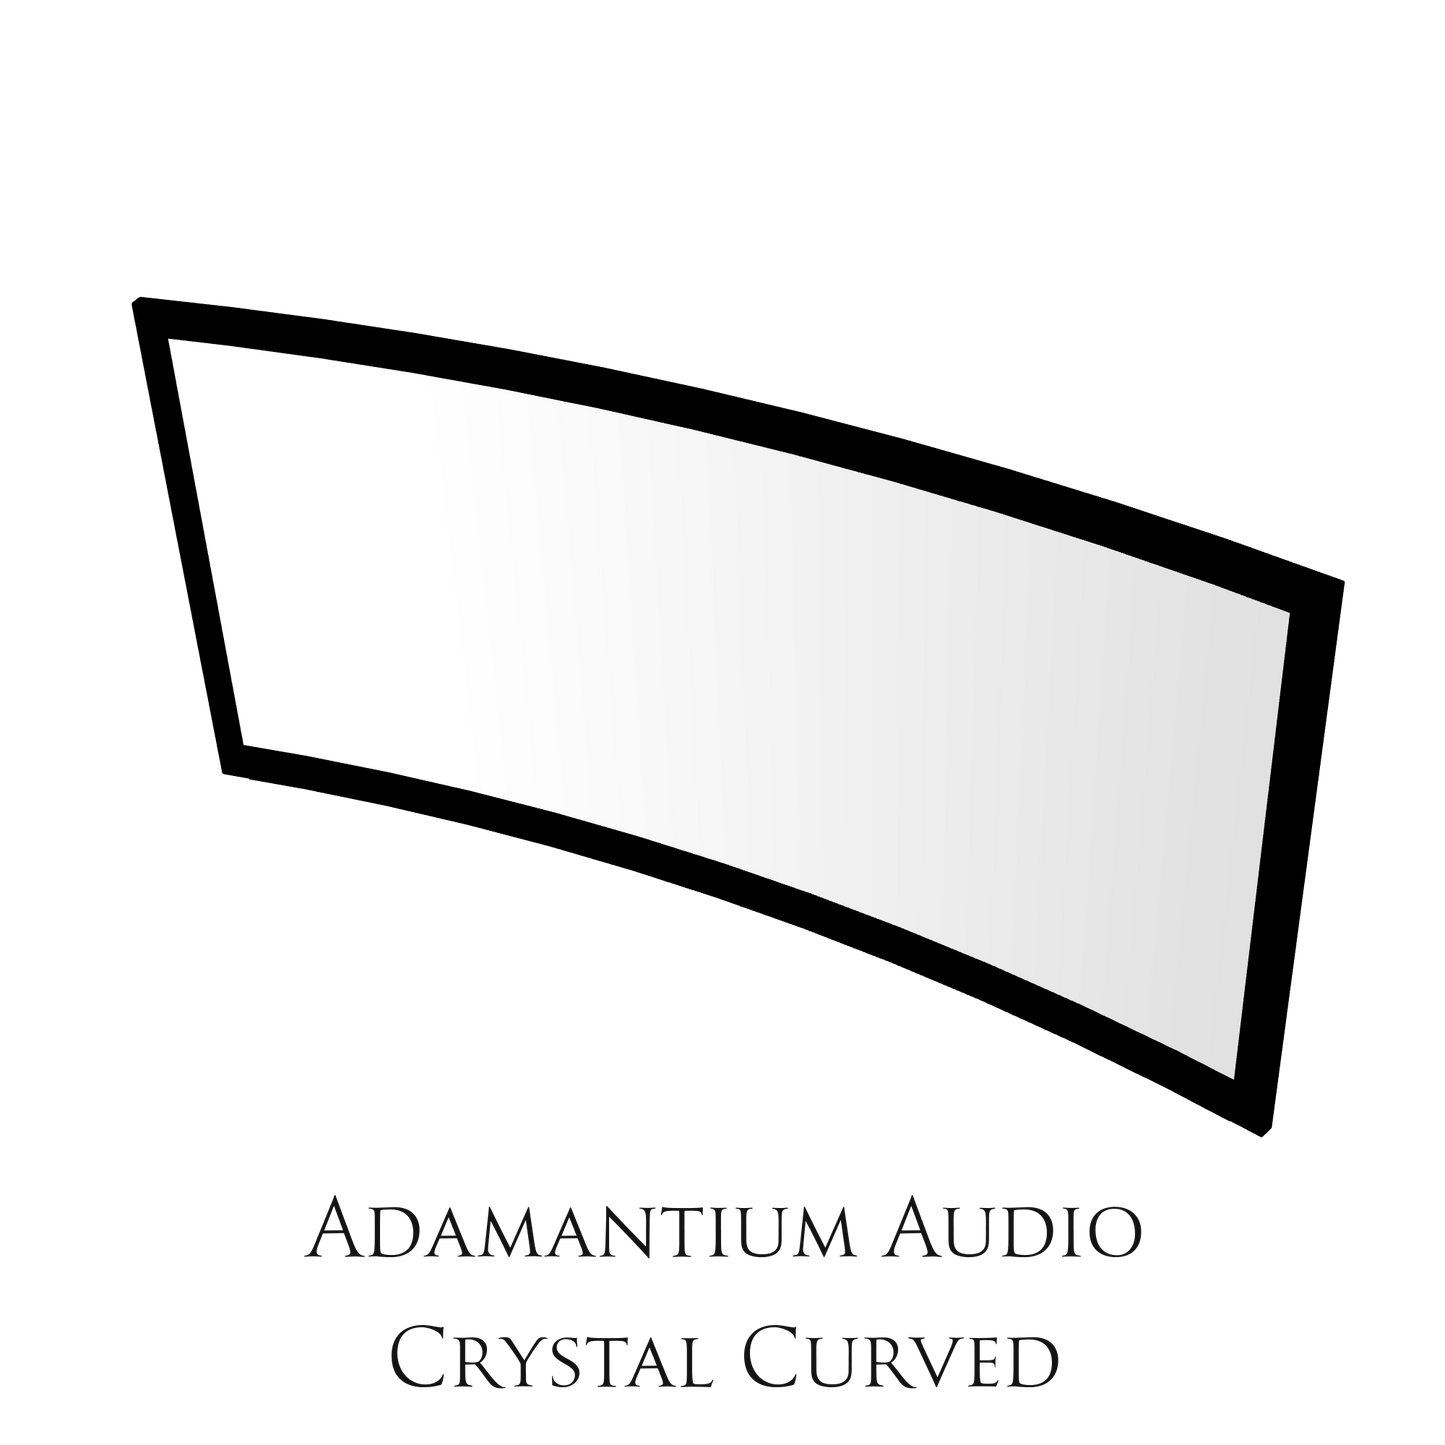 
                  
                    Adamantium Audio Rahmenleinwand Crystal Curved 21:9
                  
                